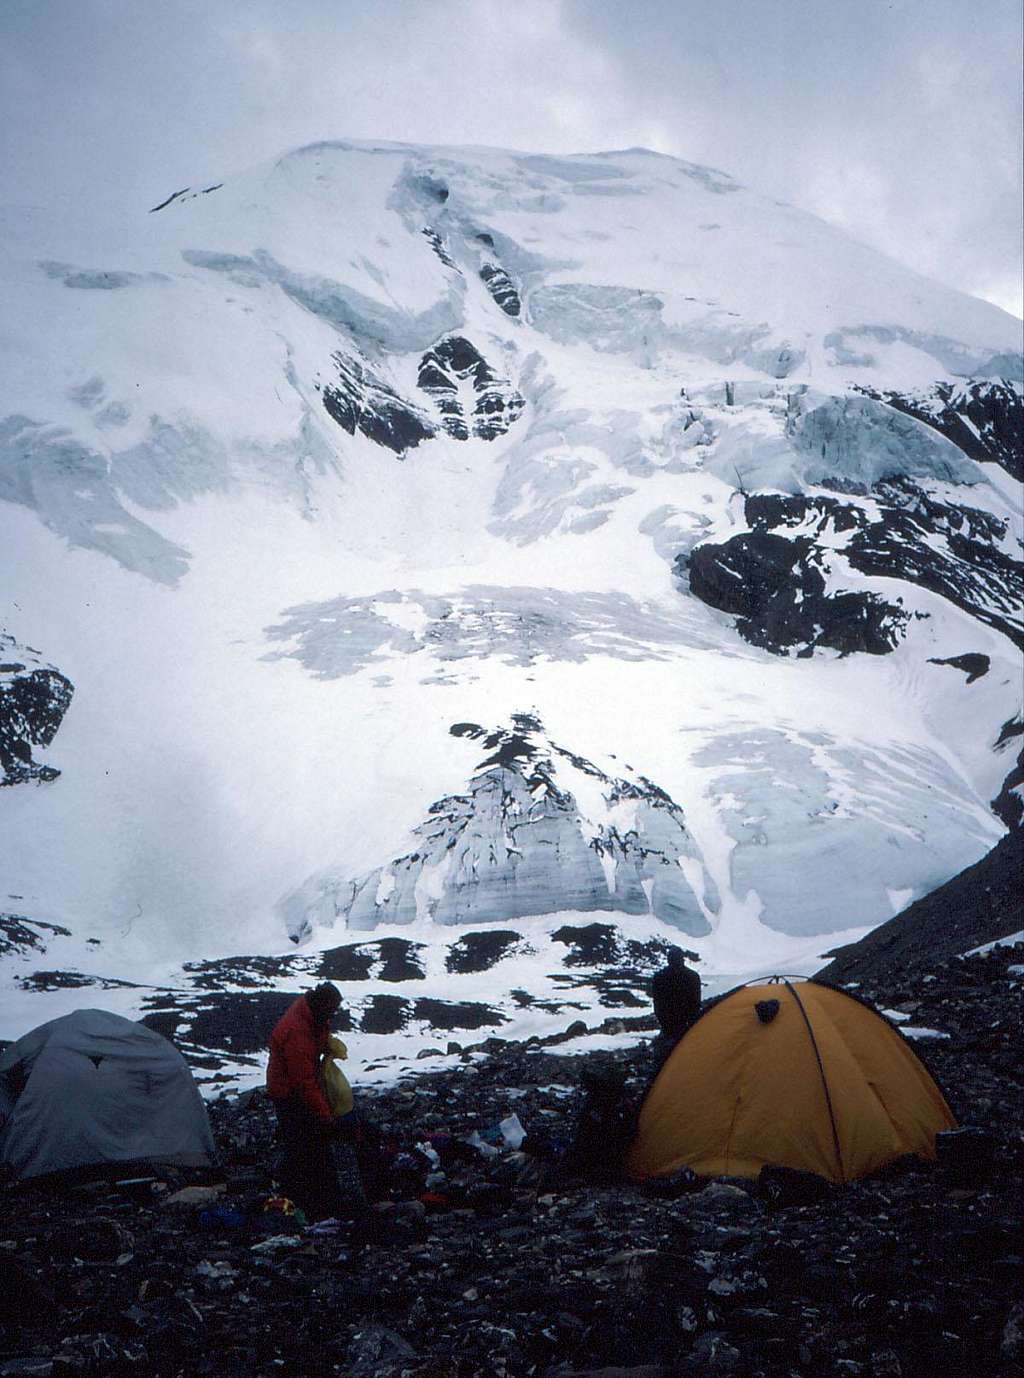 Icy North Face of Thorung Peak